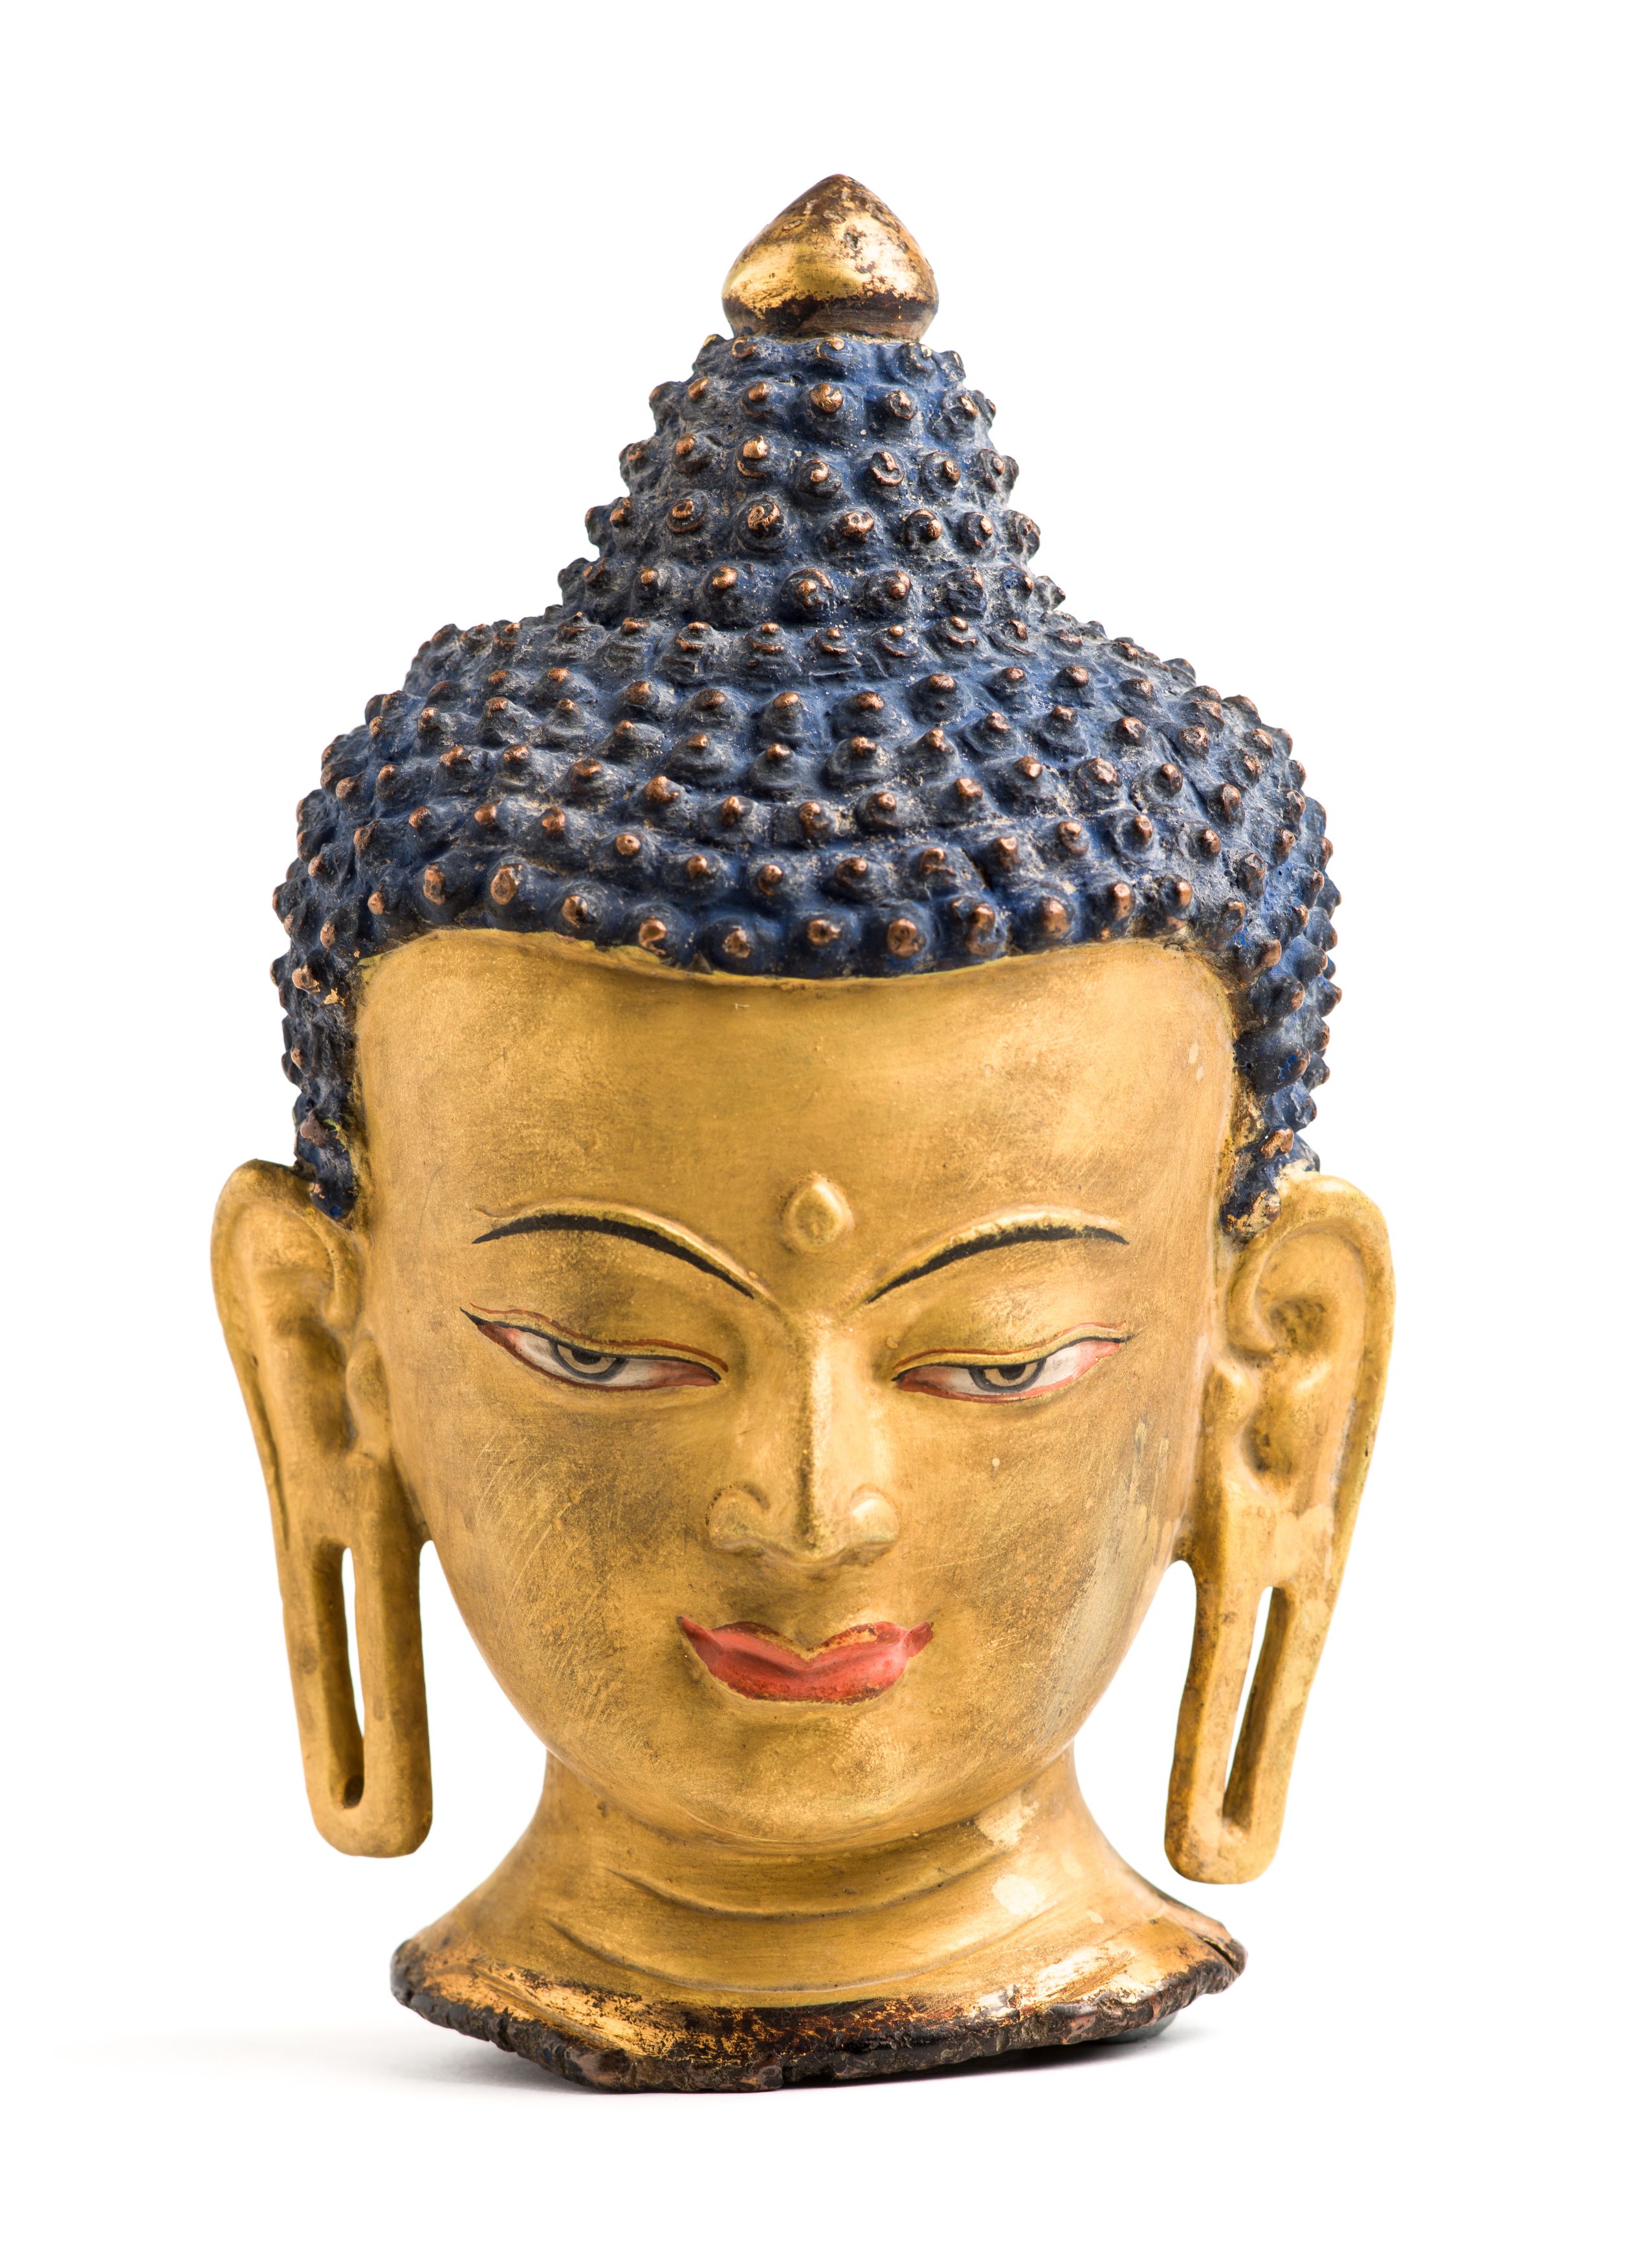 A BRONZE GILT-BRONZE HEAD OF BUDDHA, TIBET, 19TH CENTURY